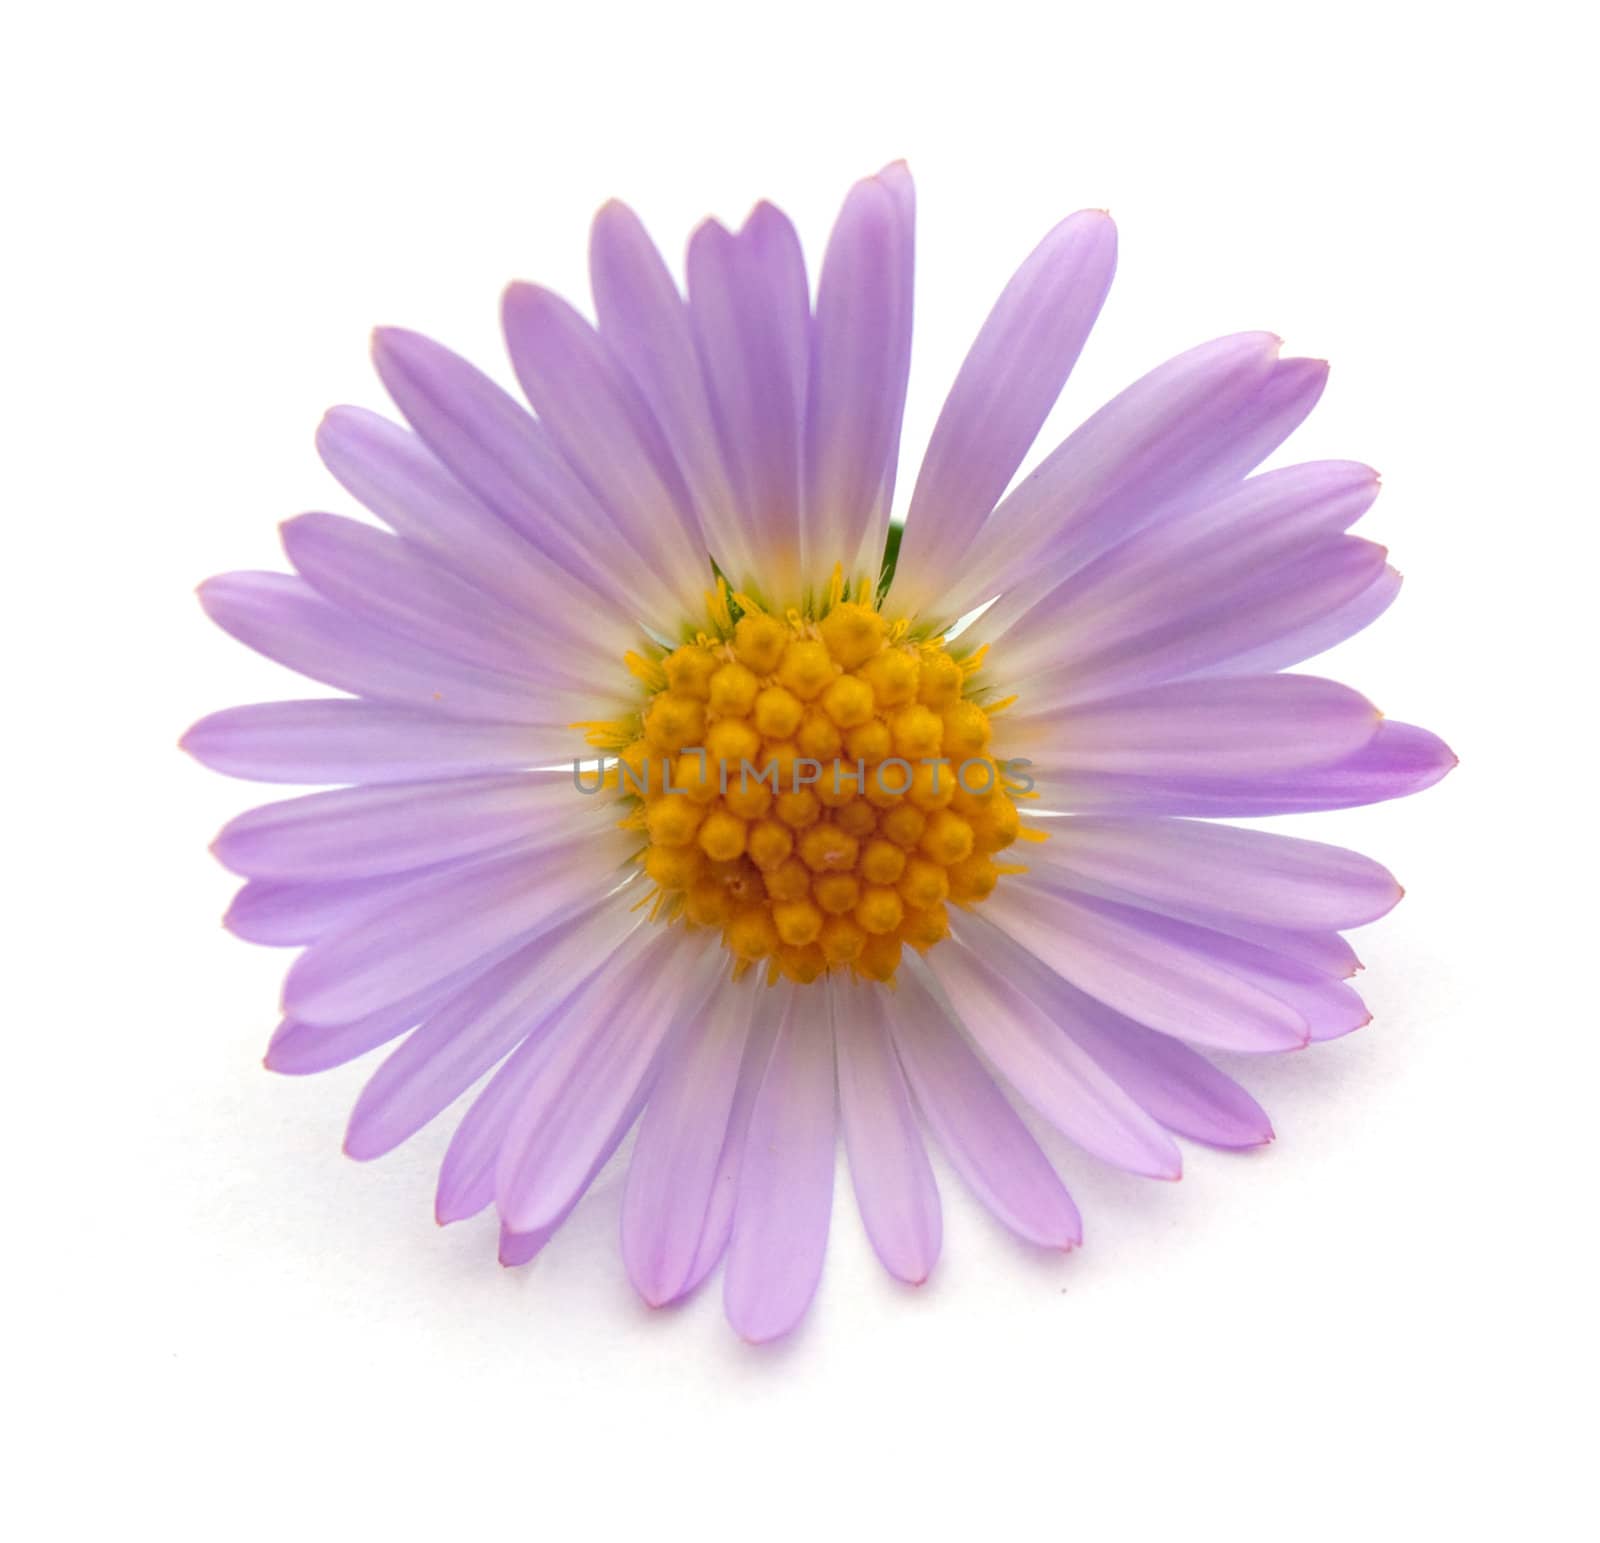 Purple flower. Photos isolated on white background.